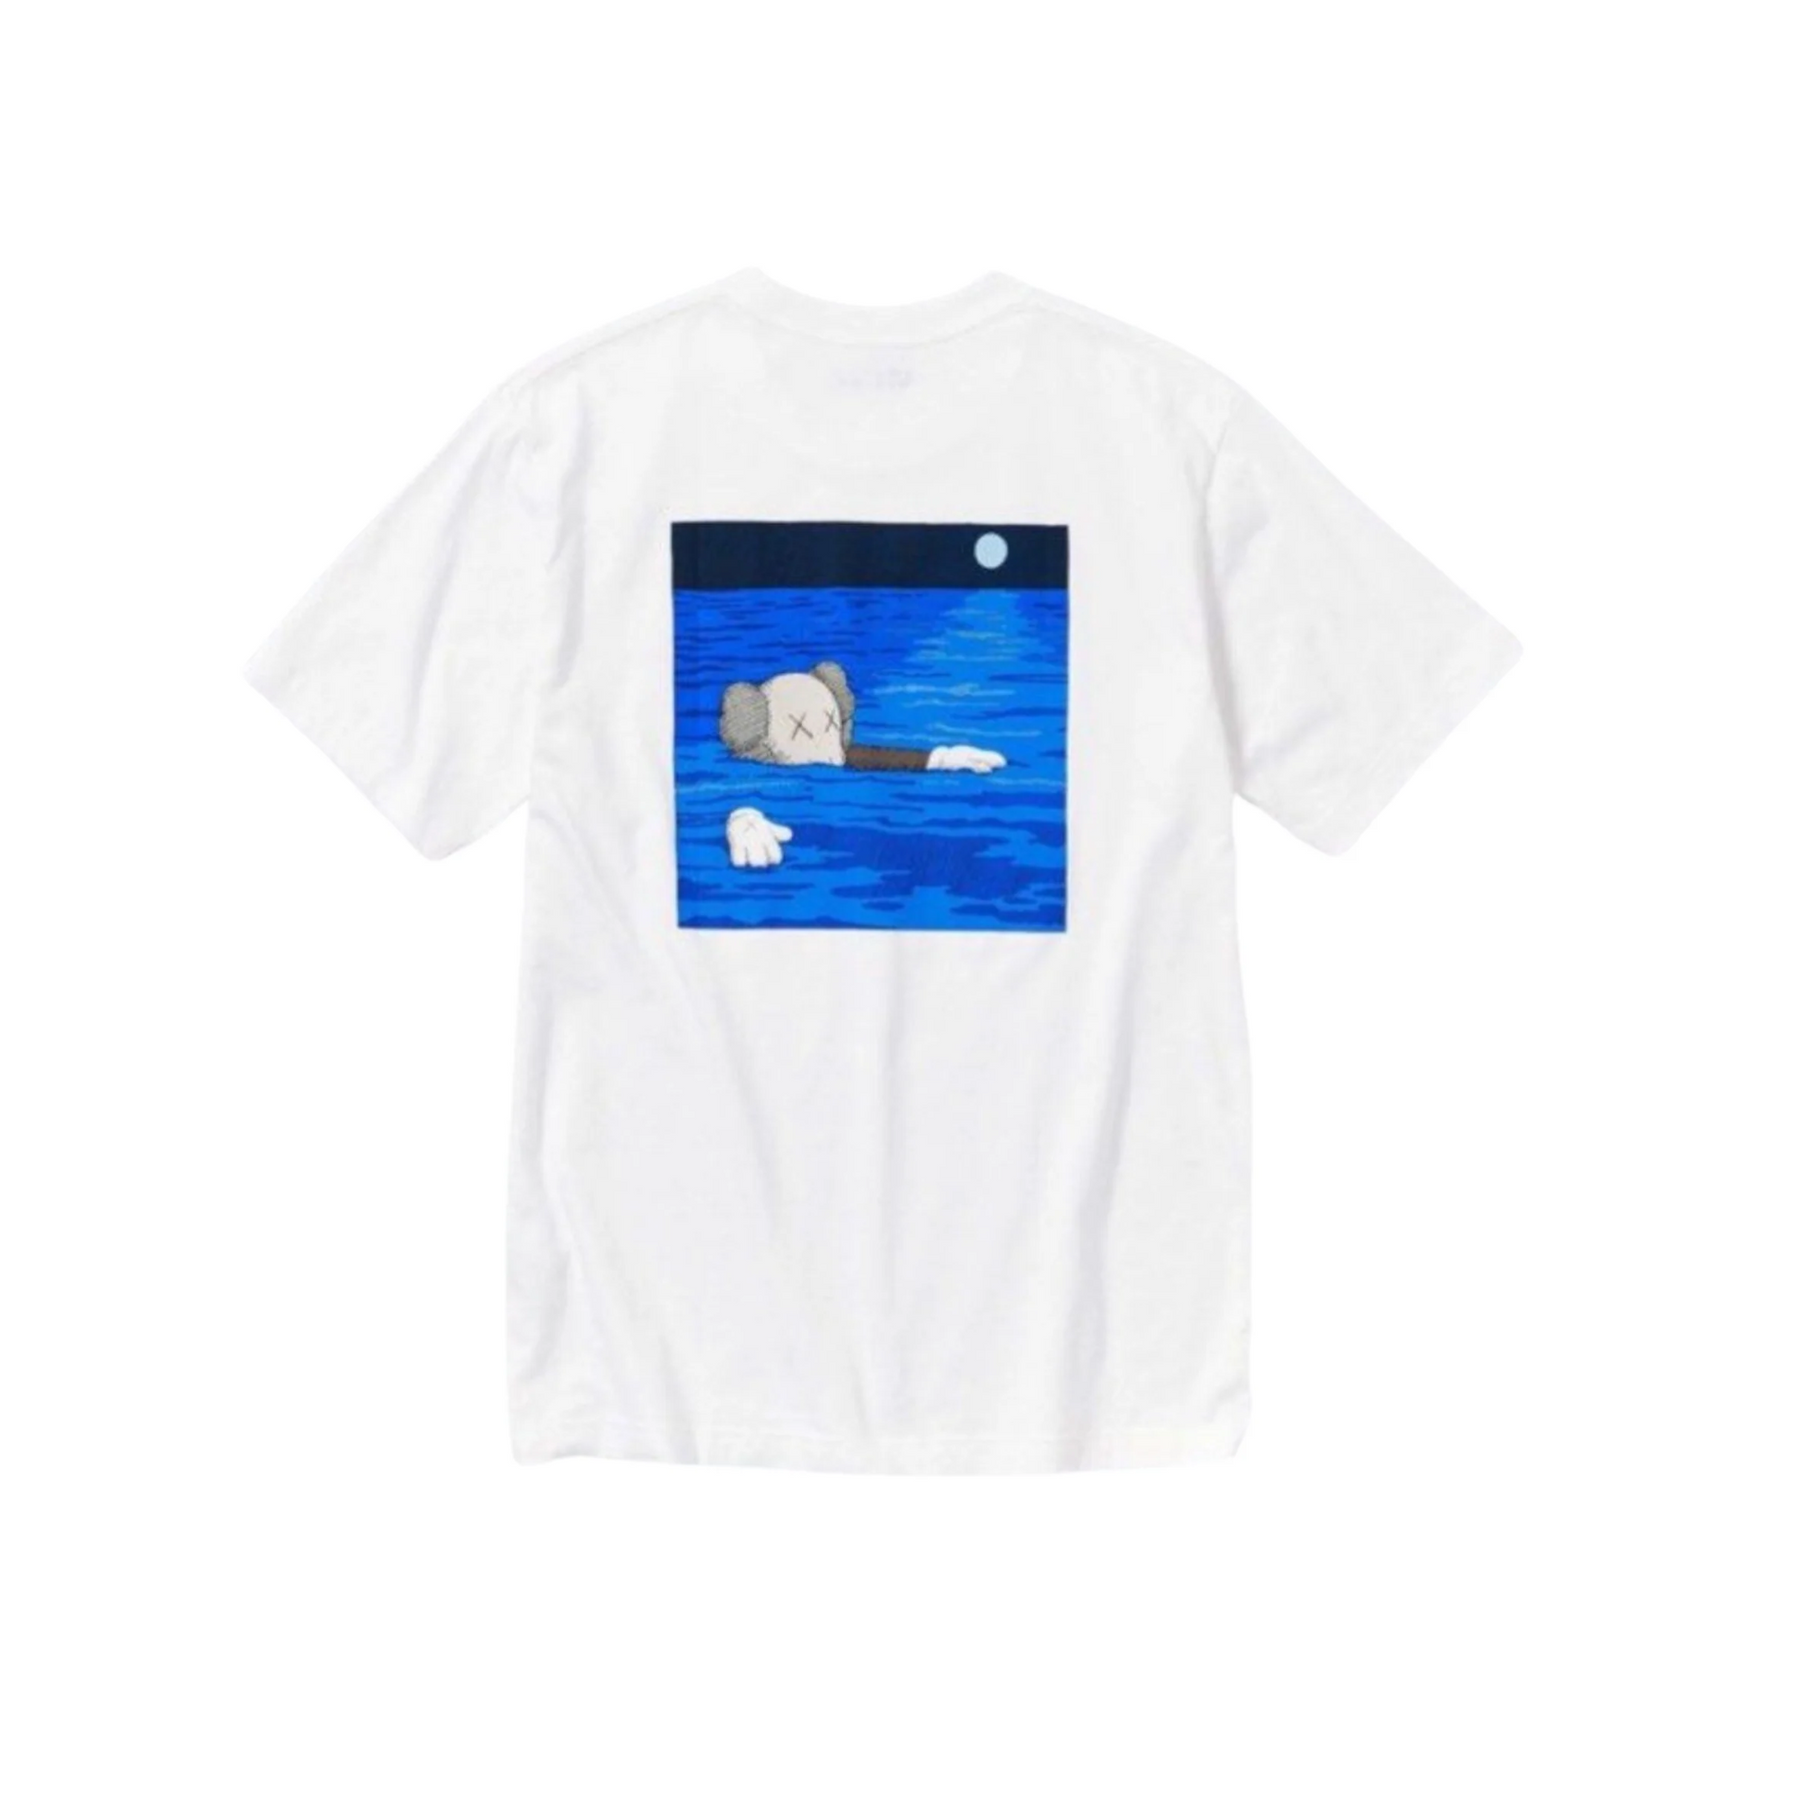 KAWS x Uniqlo UT Short Sleeve Artbook Cover T-shirt “White”